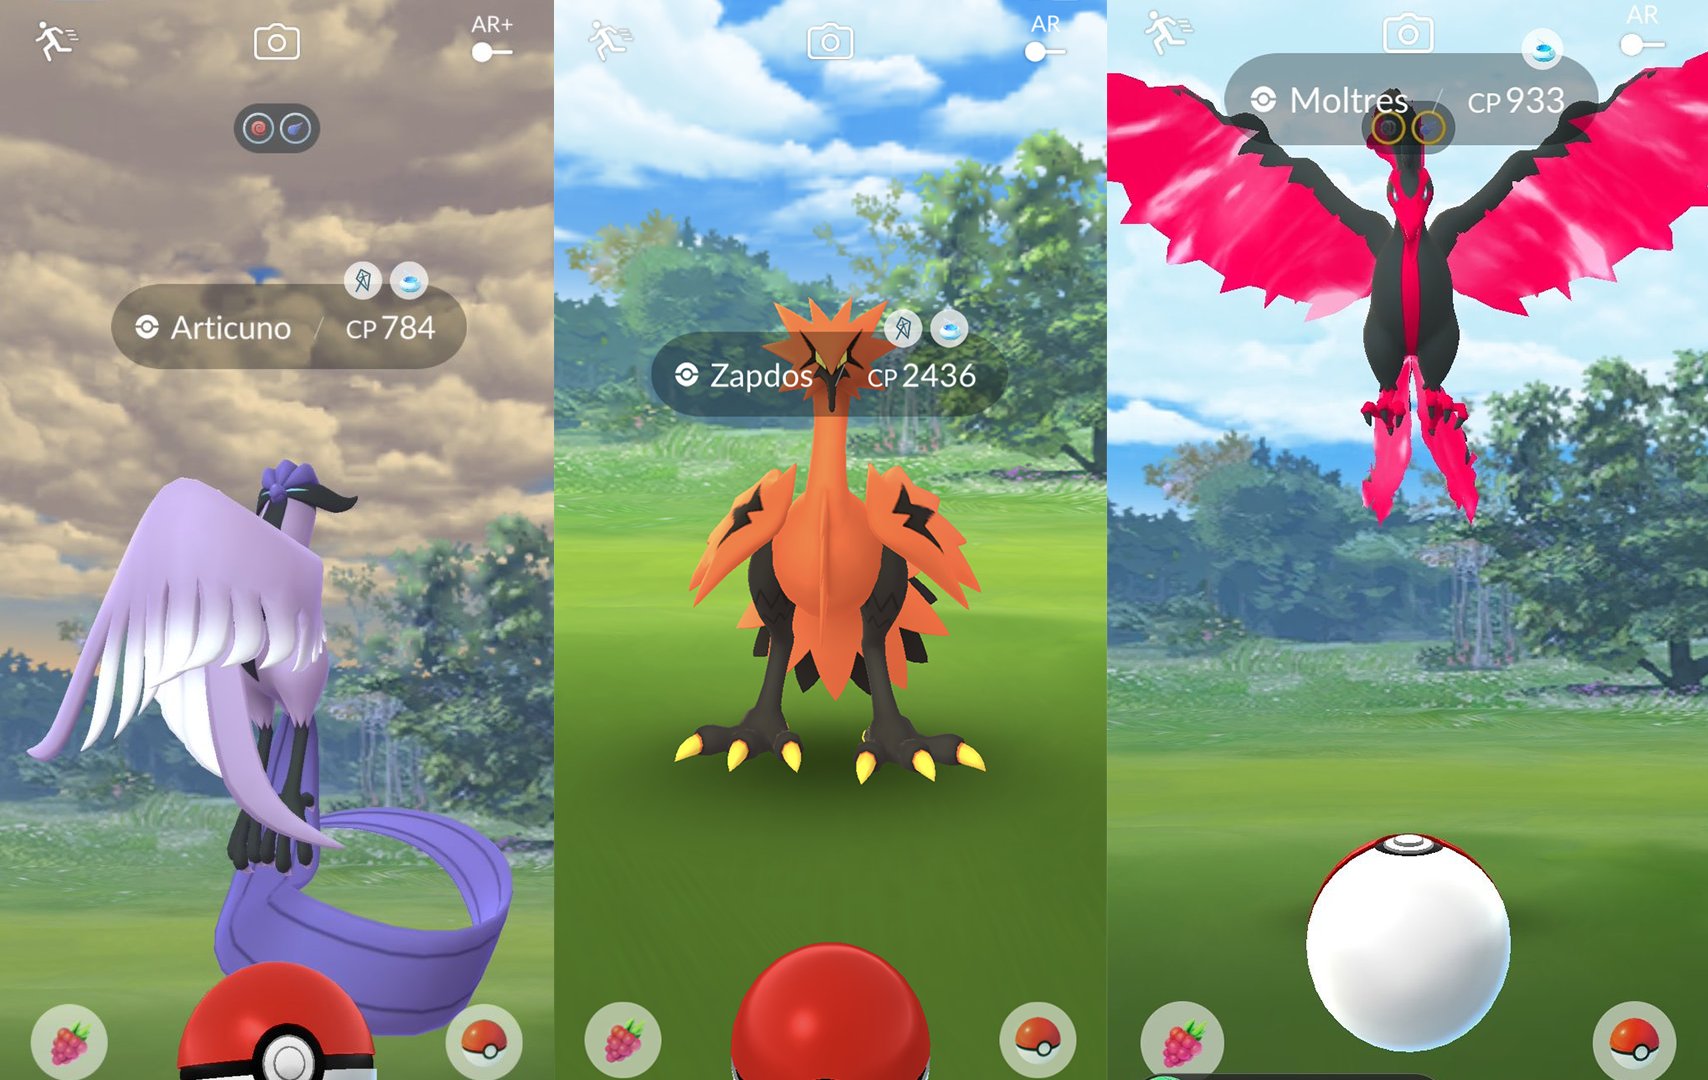 Pokémon GO recebe lendários de Pokémon X/Y na próxima semana